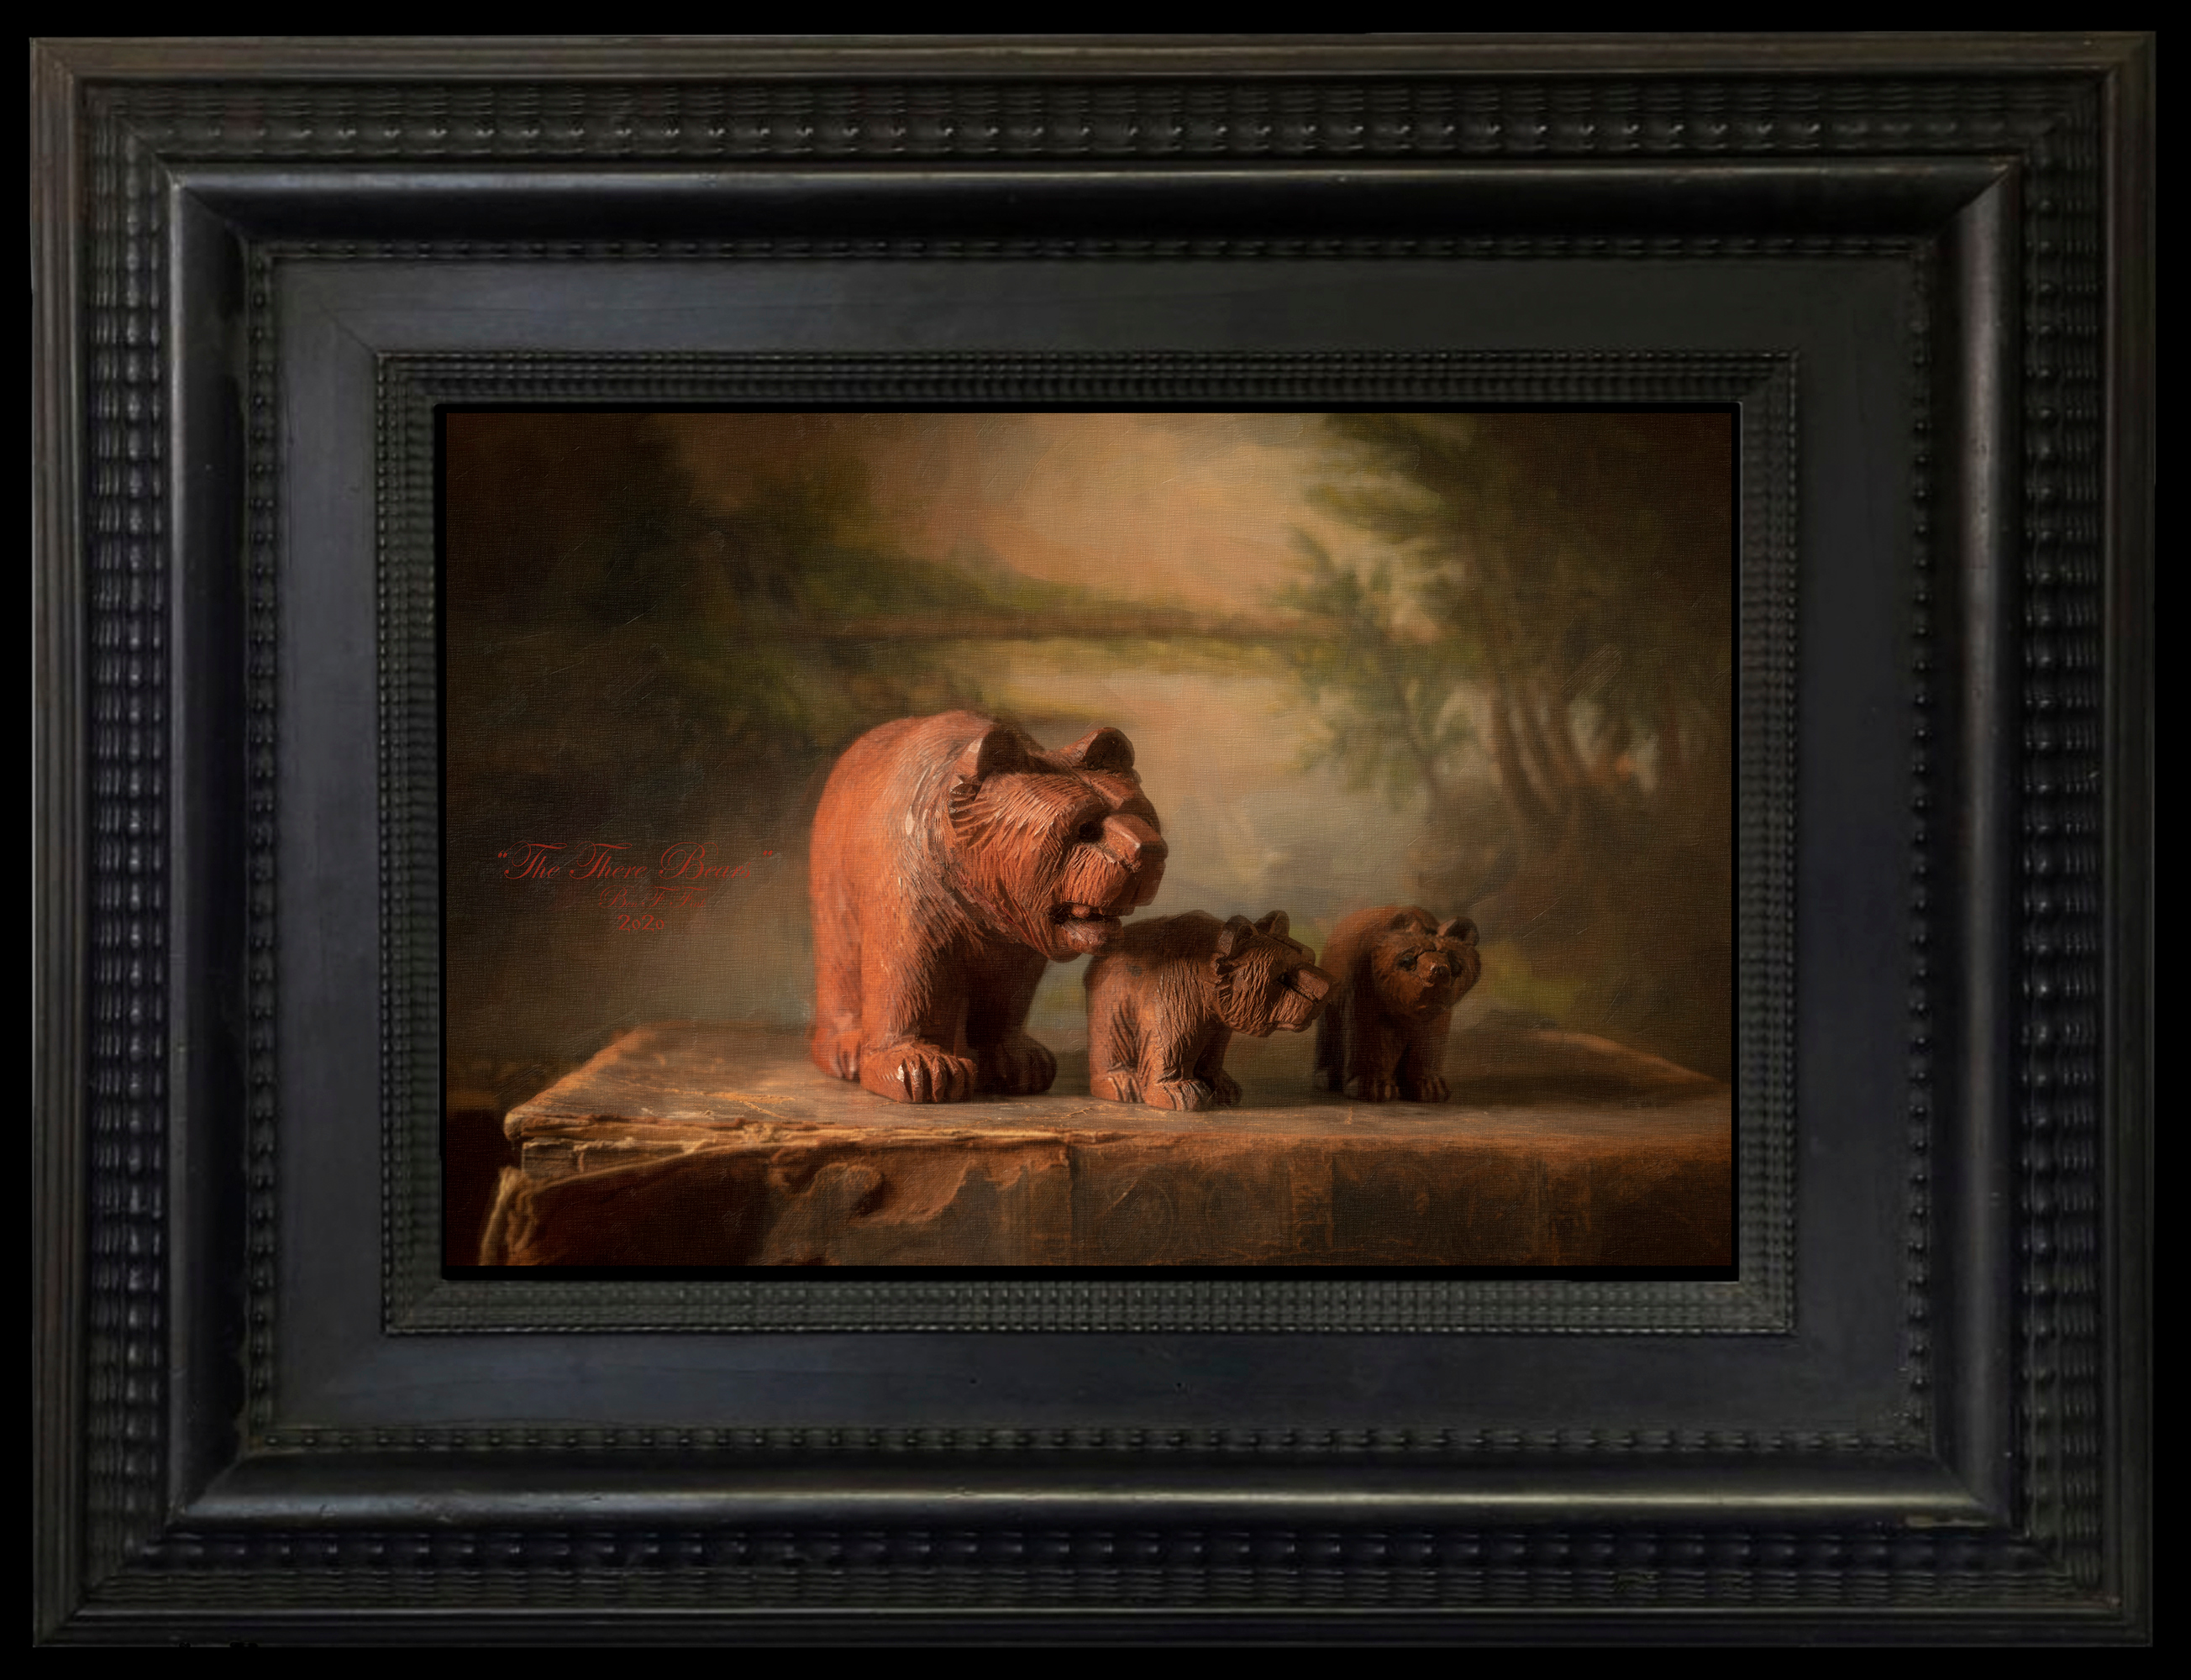 The three bears limited edition framed etddwe